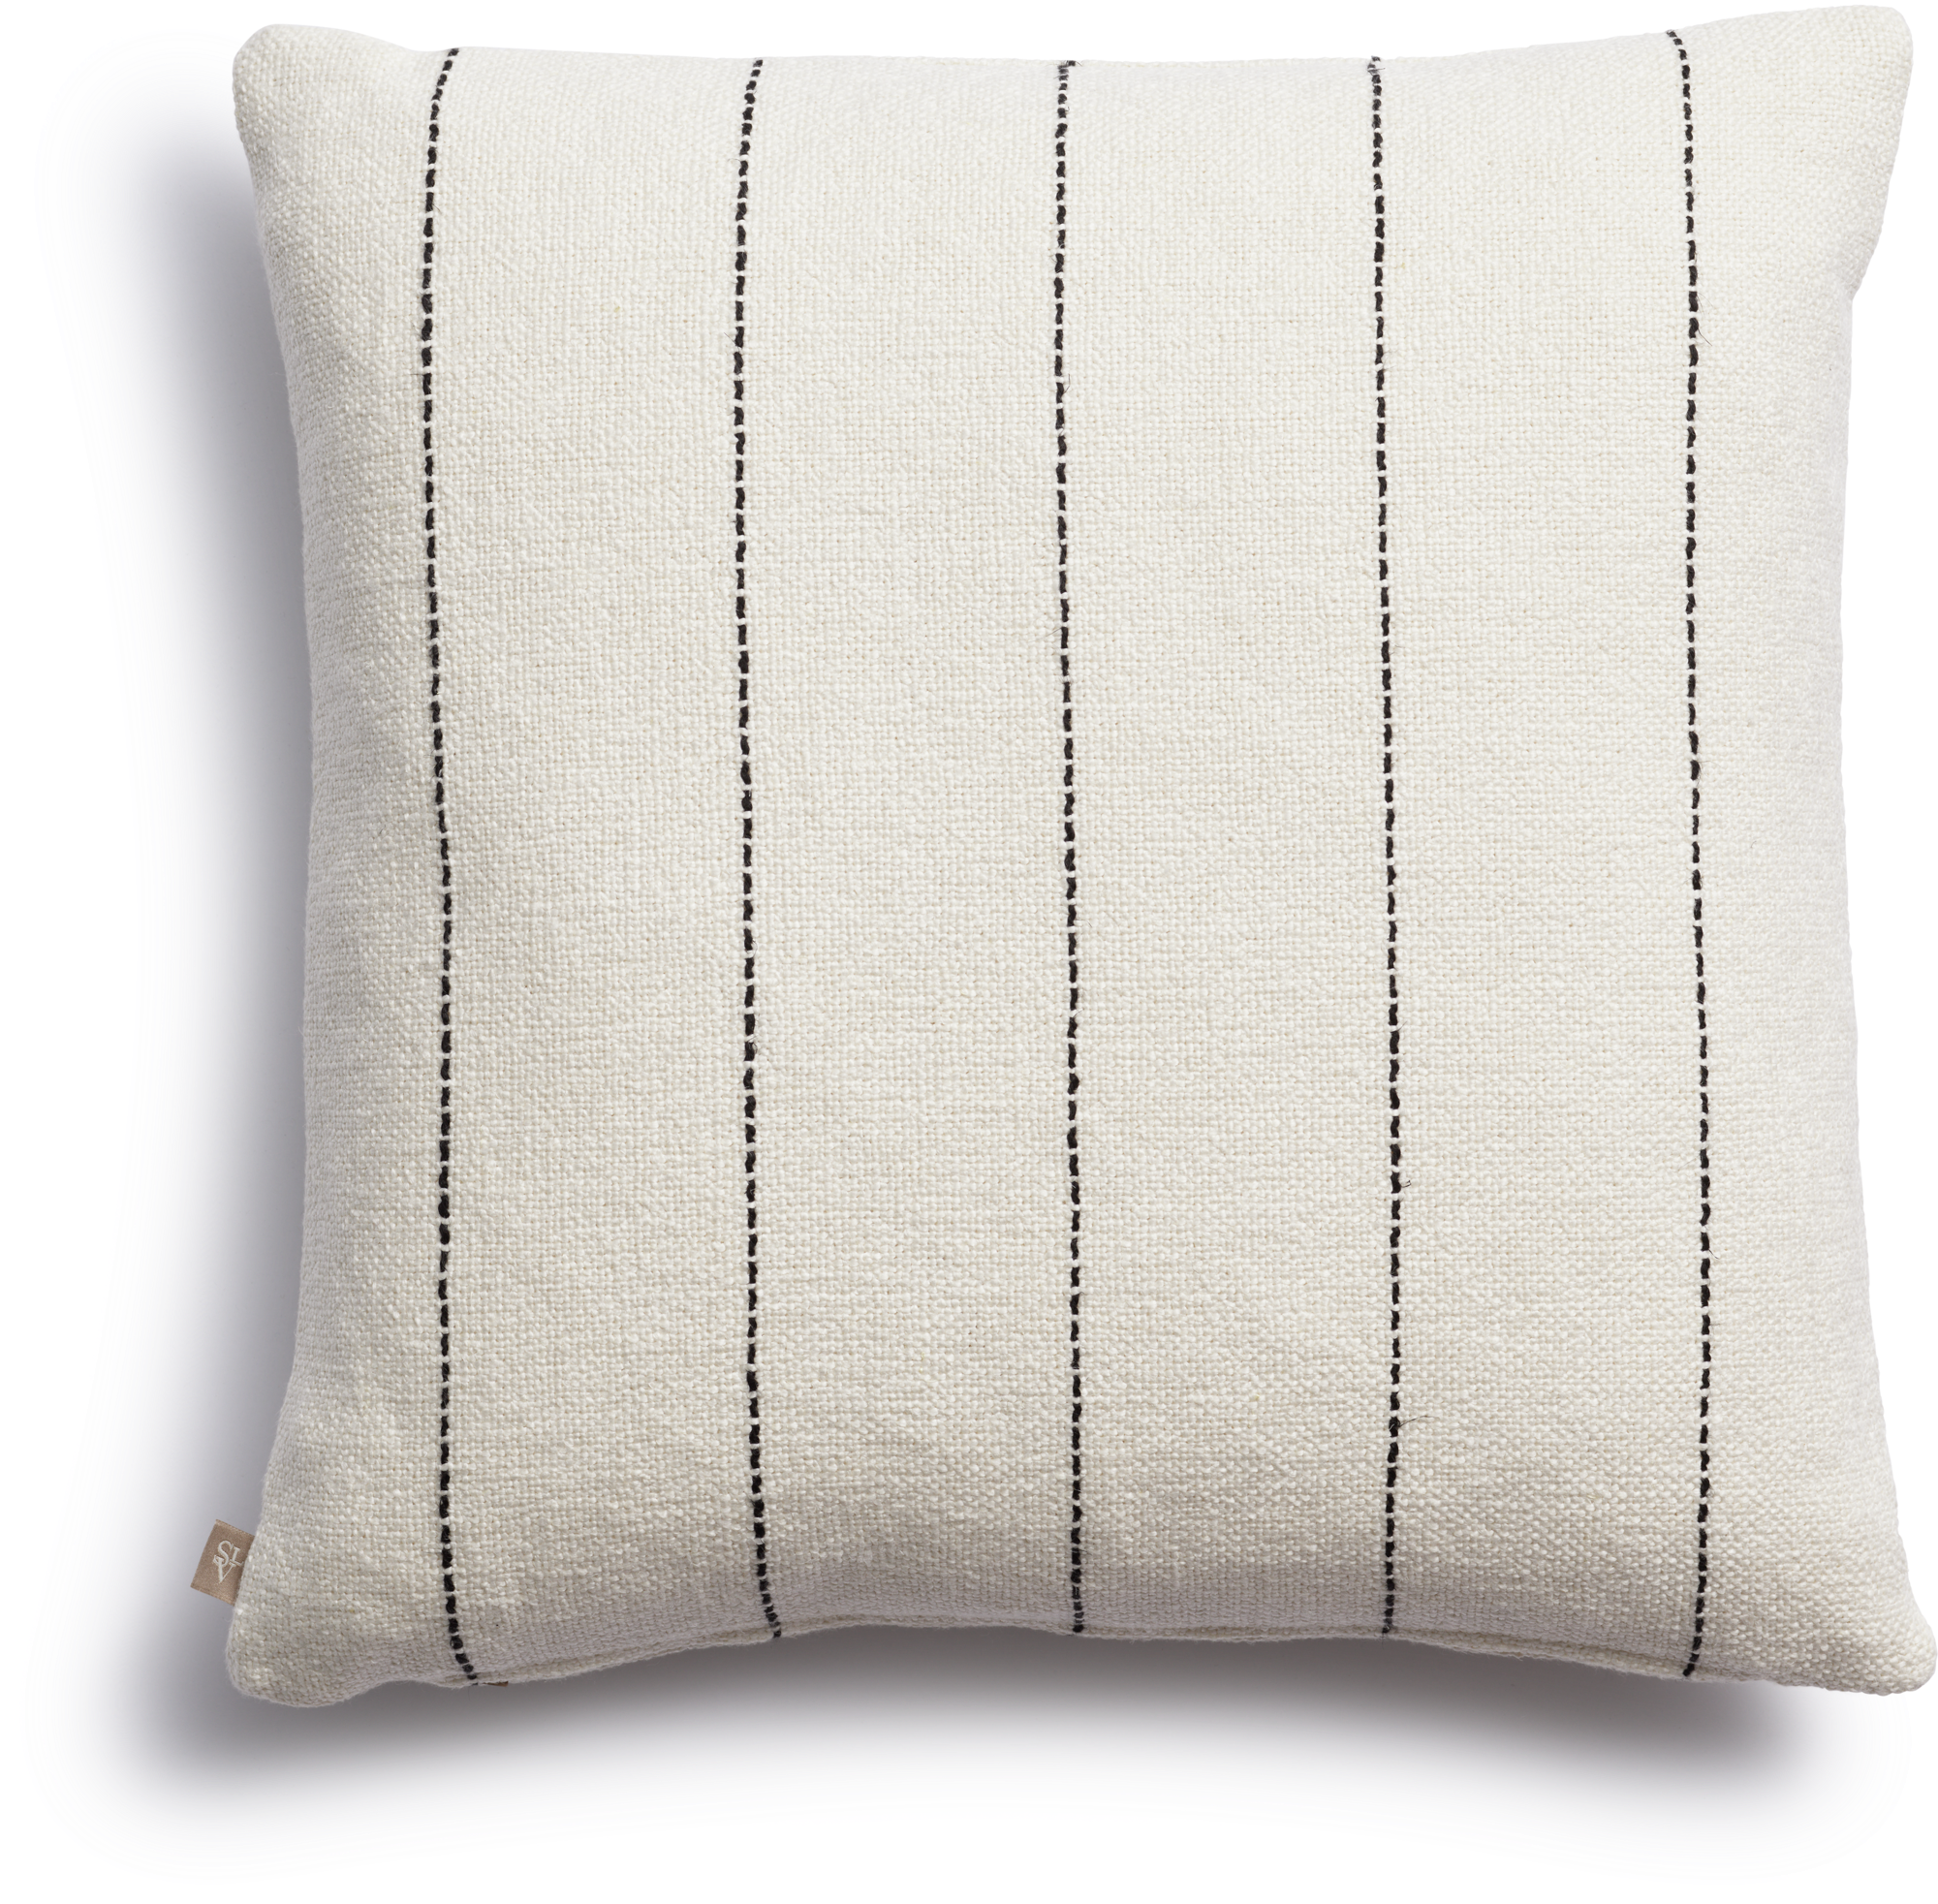 Frascarolo decorative pillow